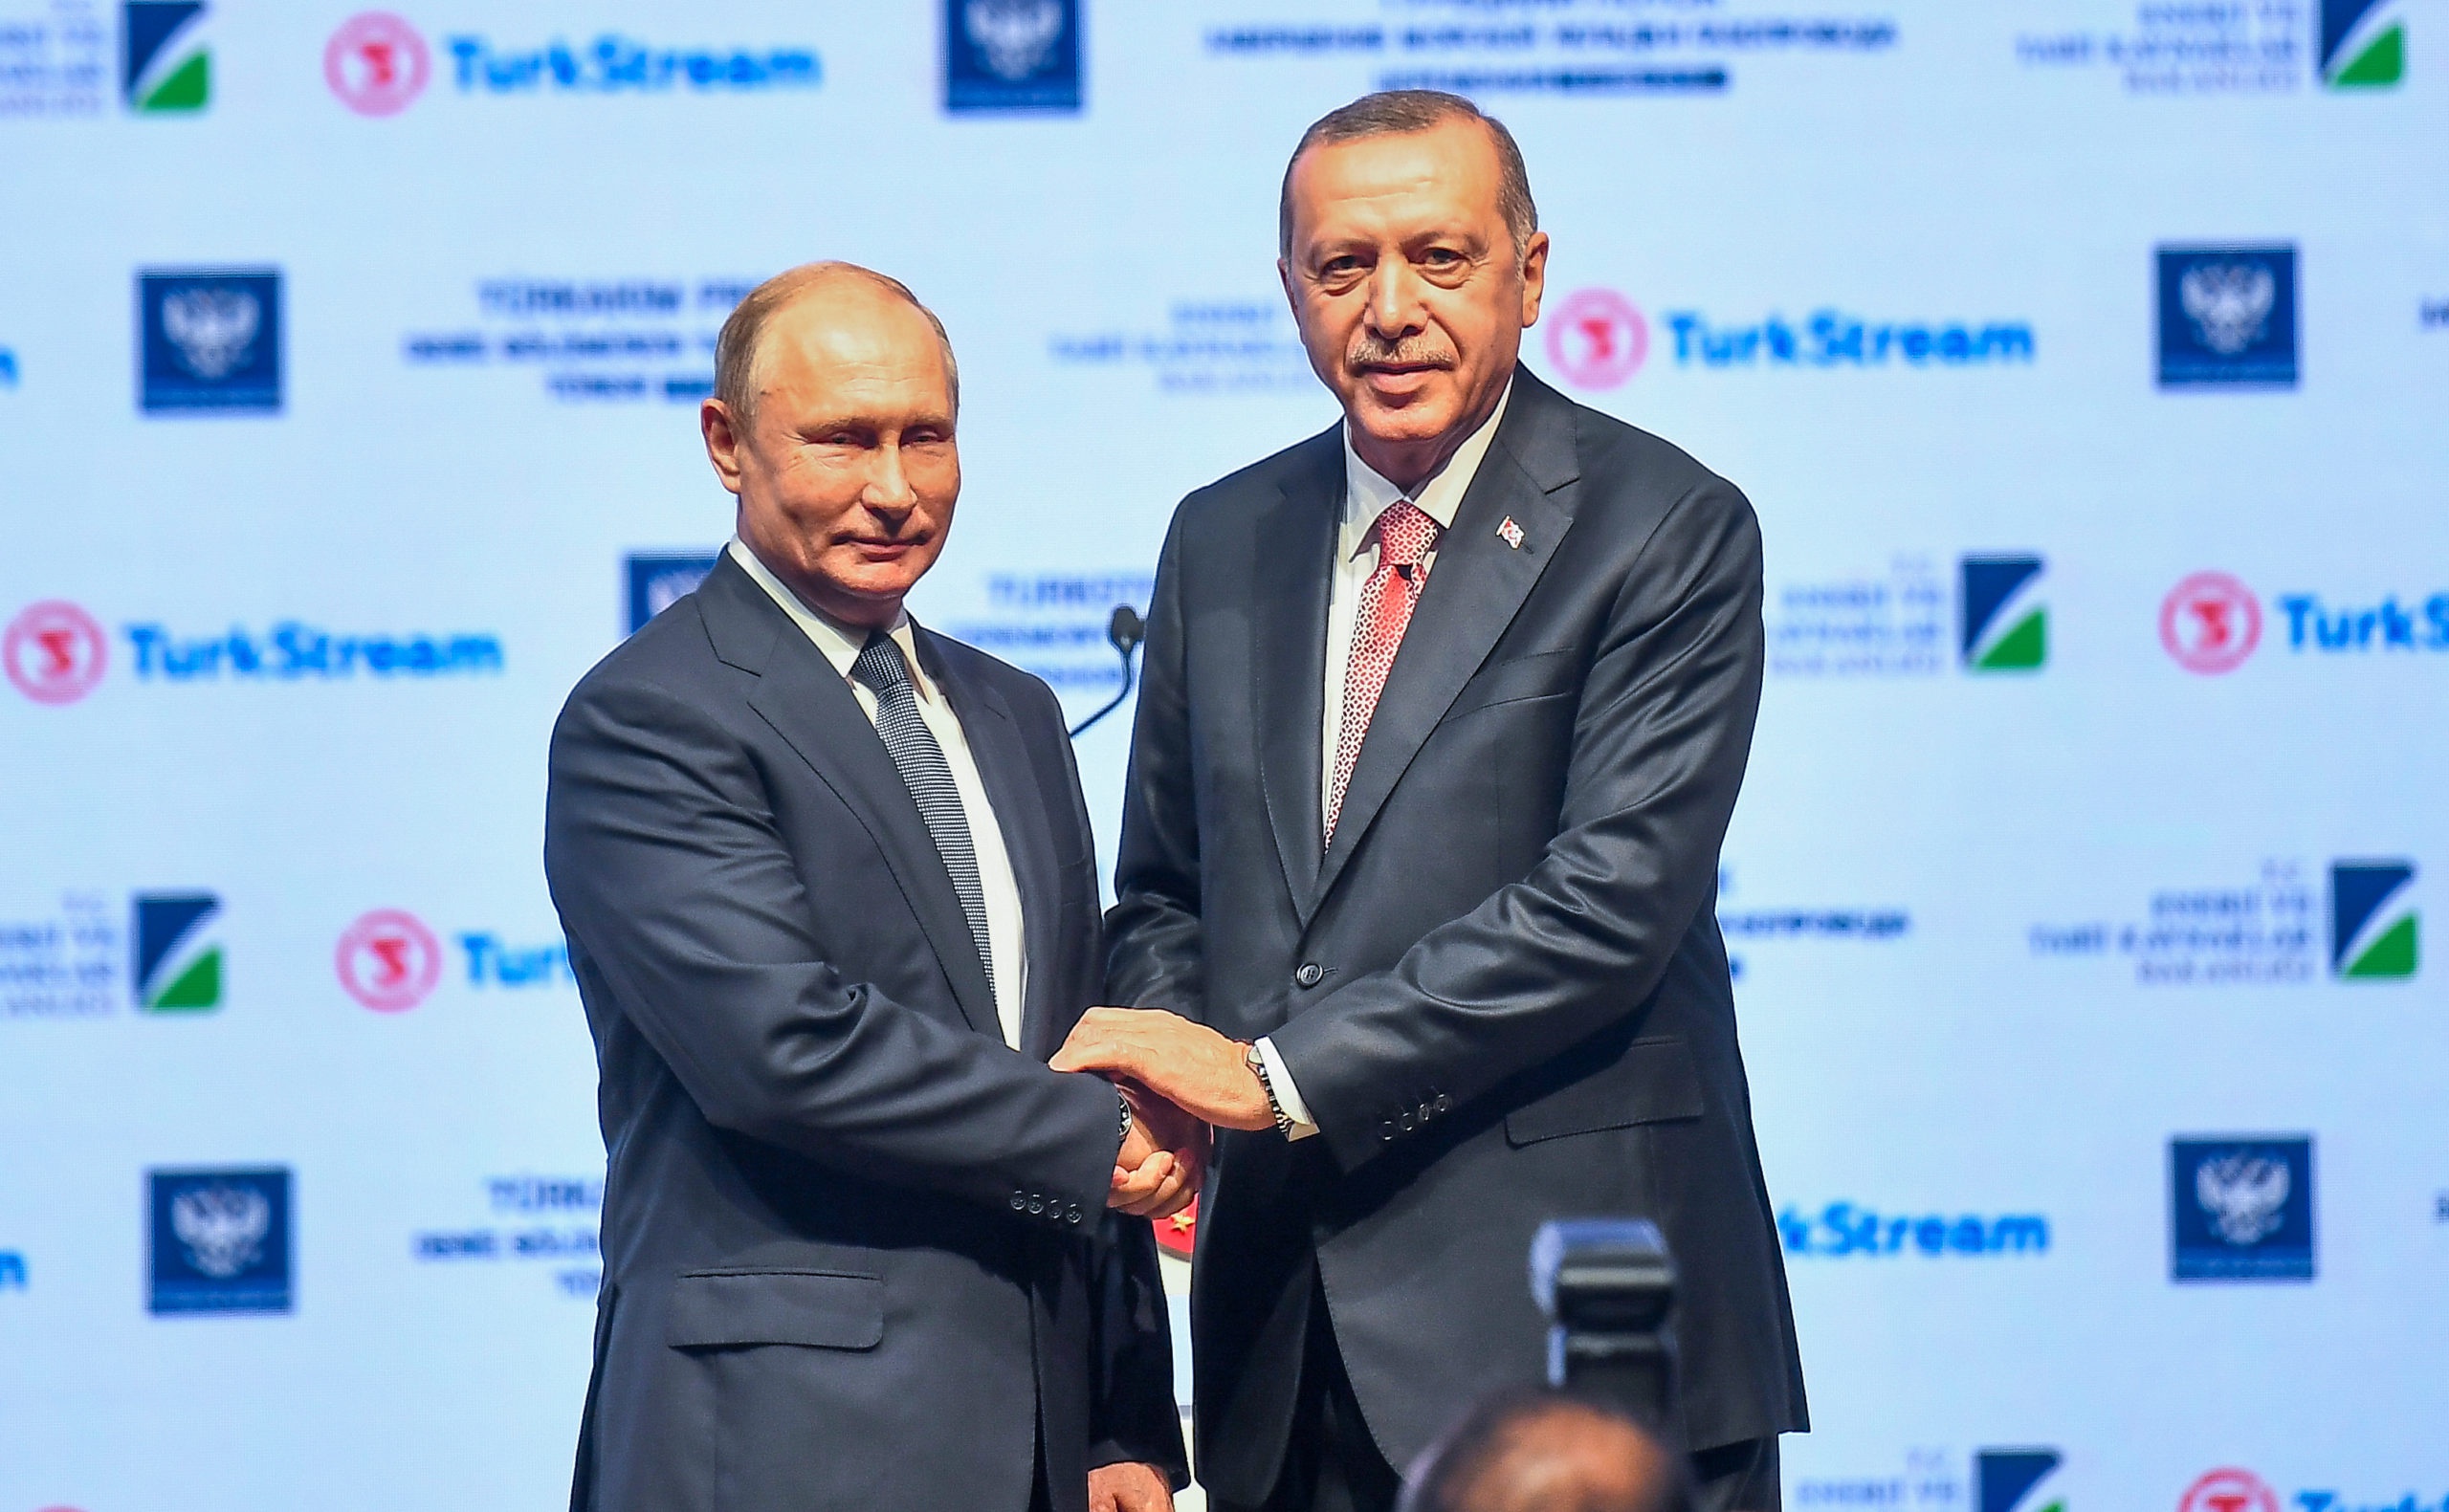 Turkey’s Kurdish obsession explains Putin’s gains and US strains / Omer Taspinar